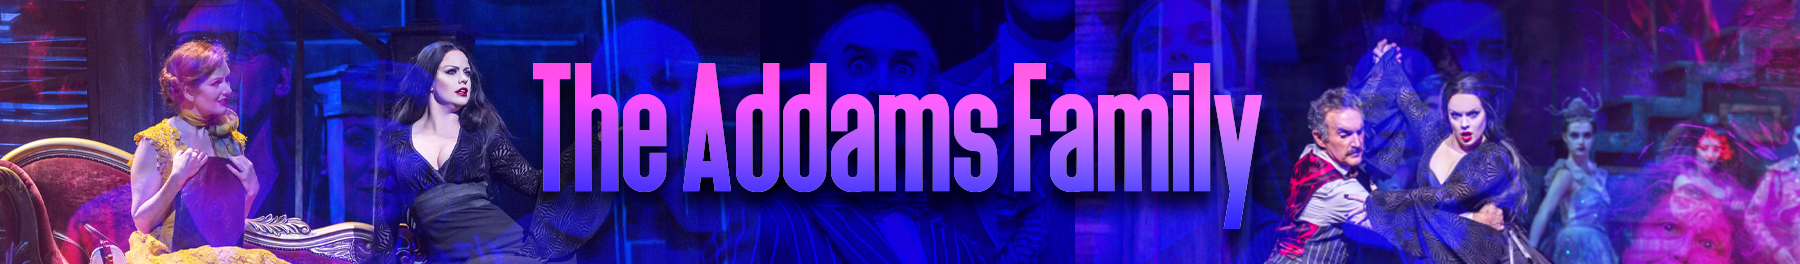 Addams Family Broadway Show